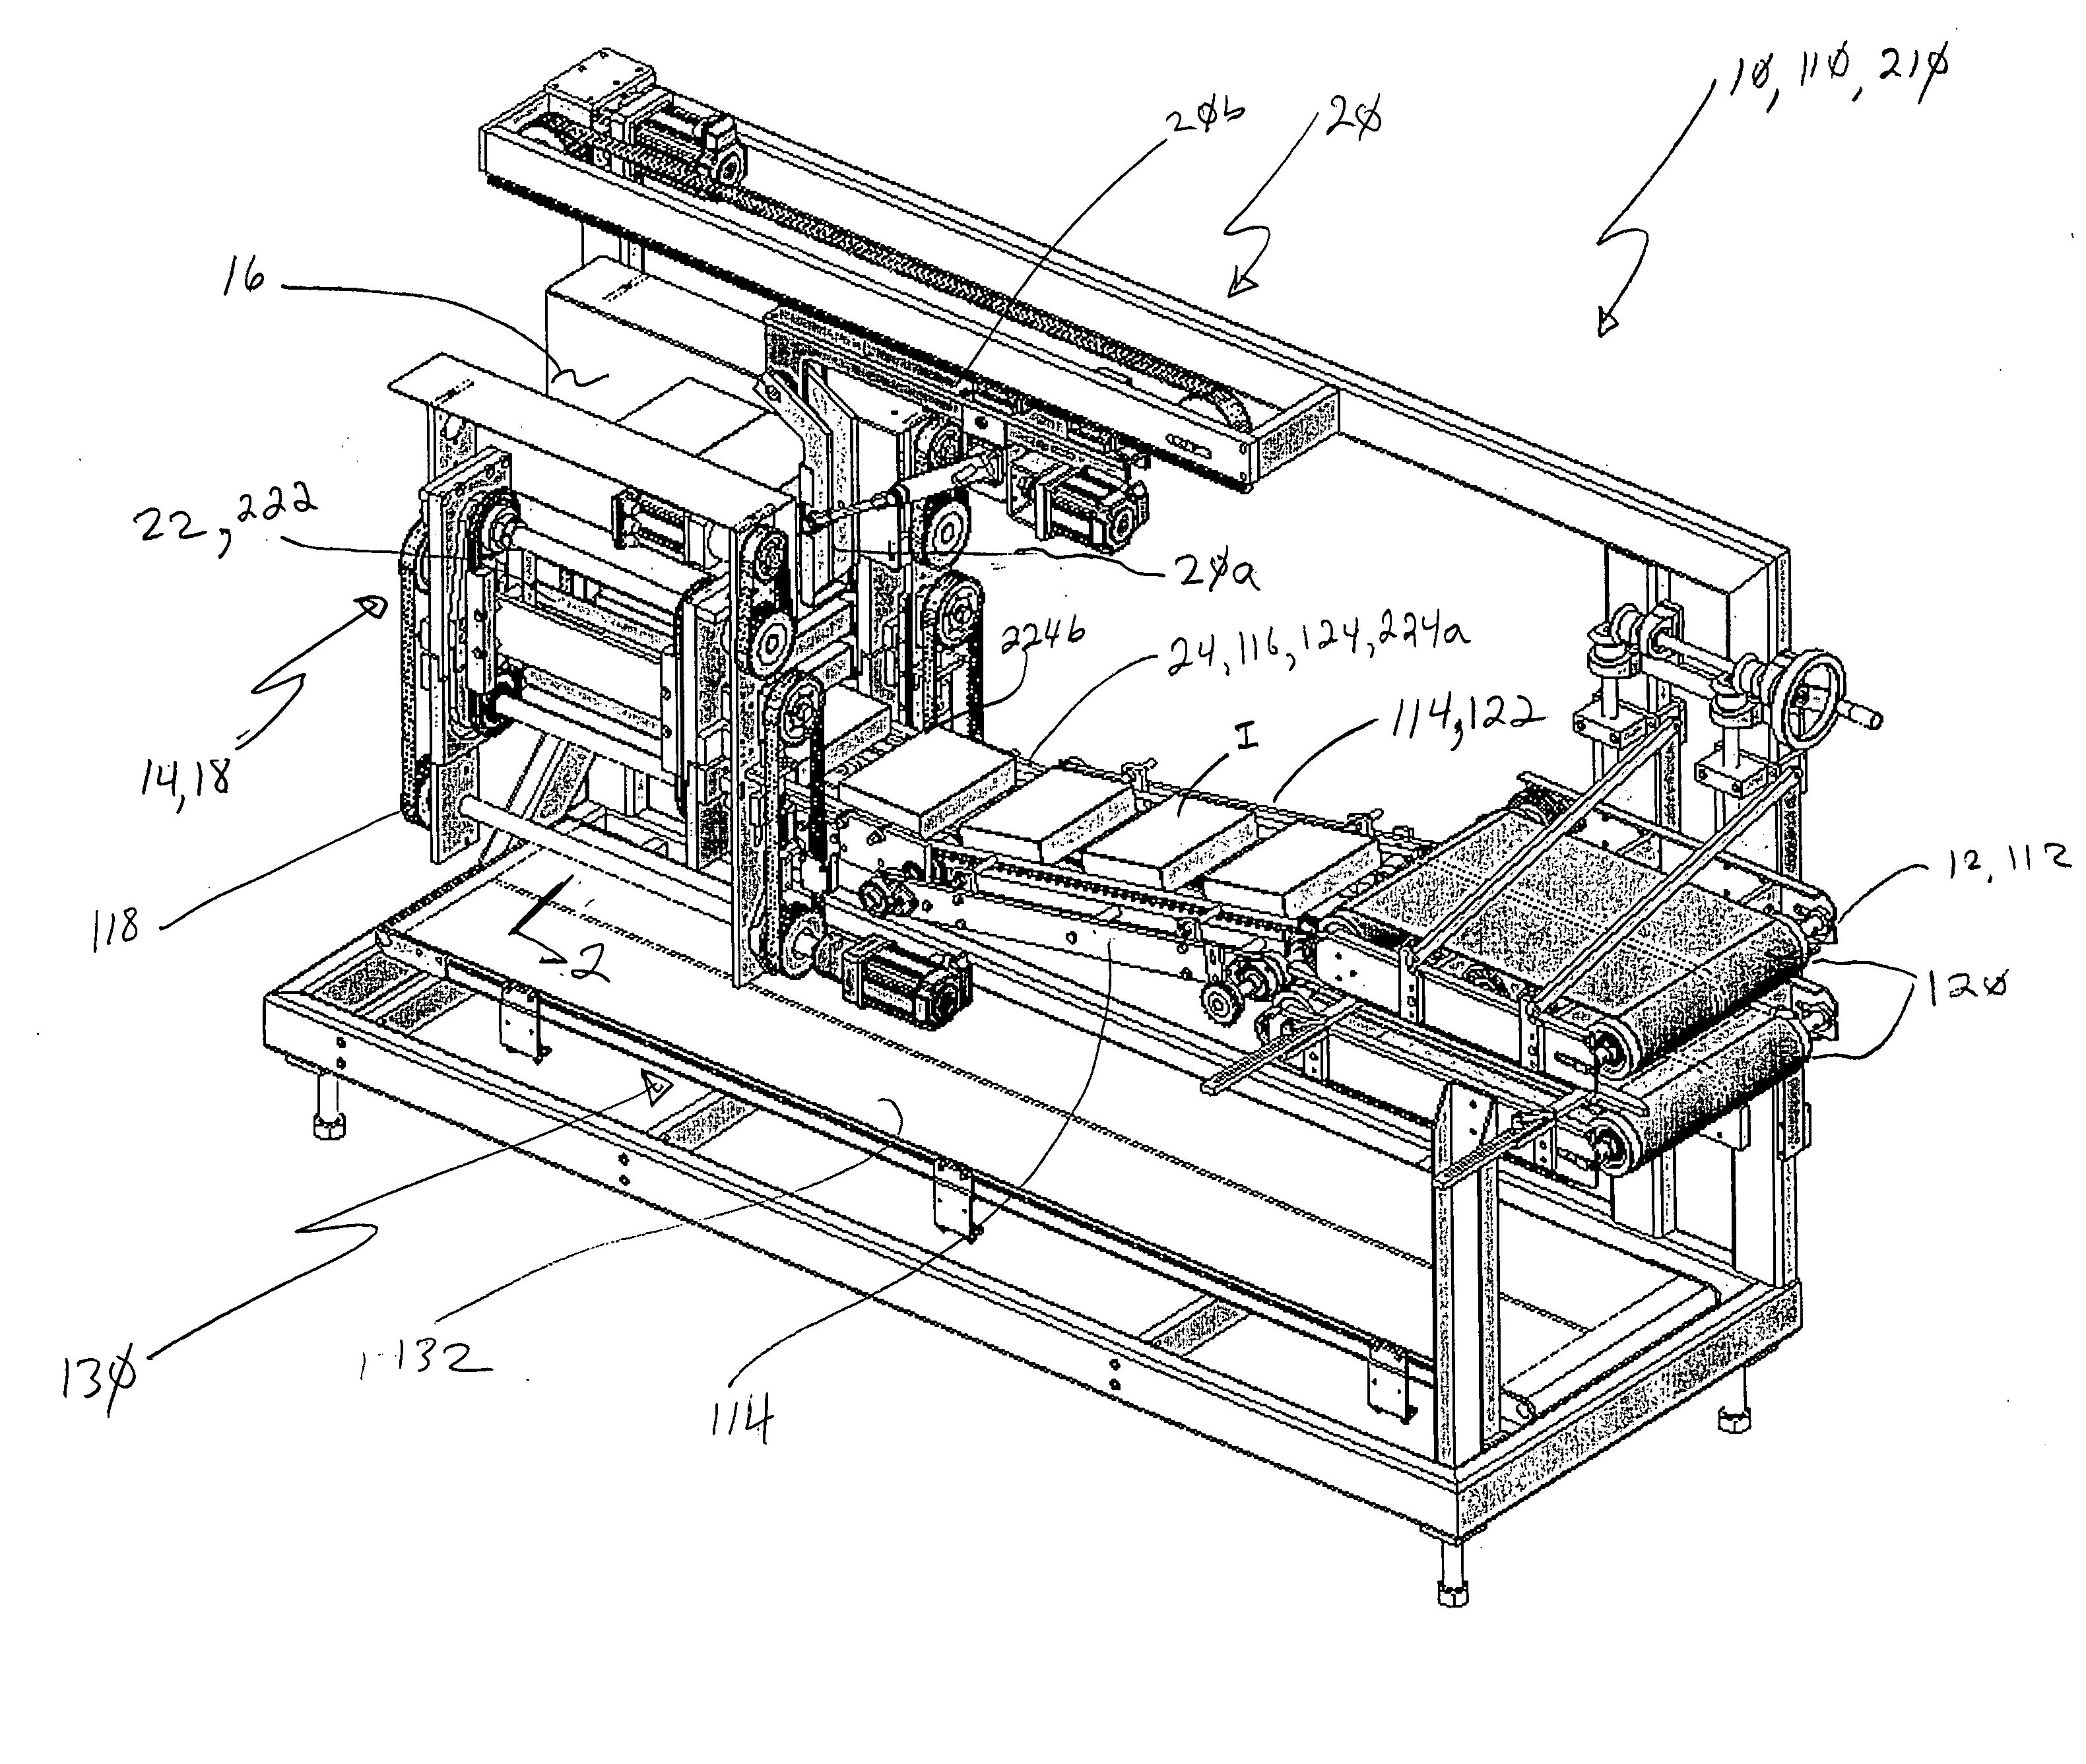 Carton stacking apparatus and method